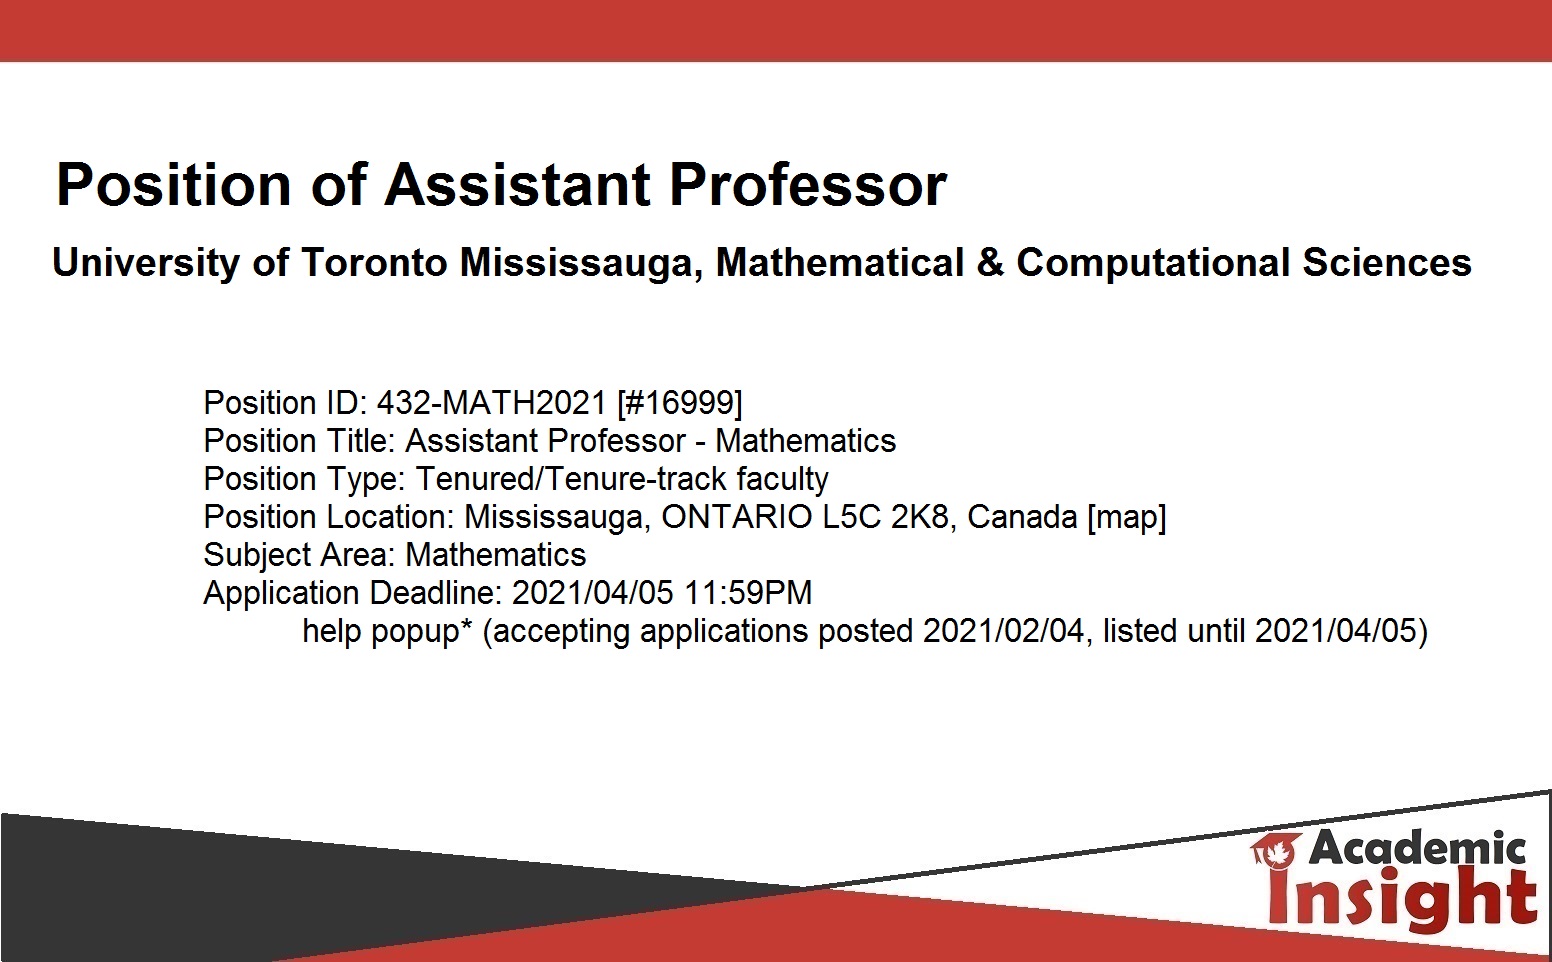 Position of Assistant Professor in Mathematics at University of Toronto Mississauga (UTM)